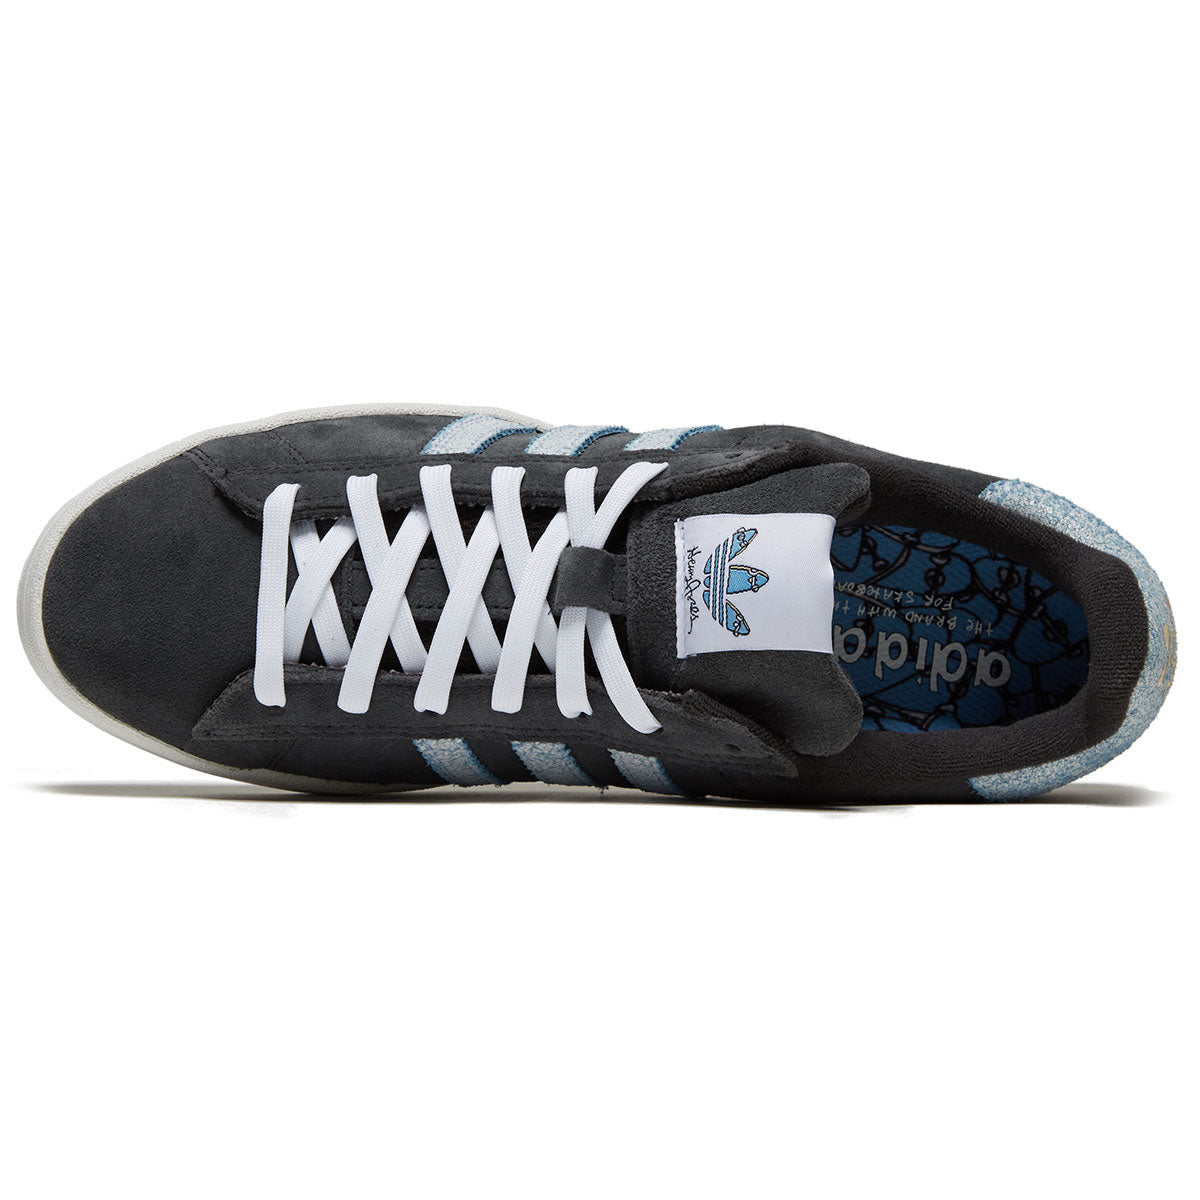 Adidas x Henry Jones Campus ADV Shoes - Carbon/White/Light Blue image 3